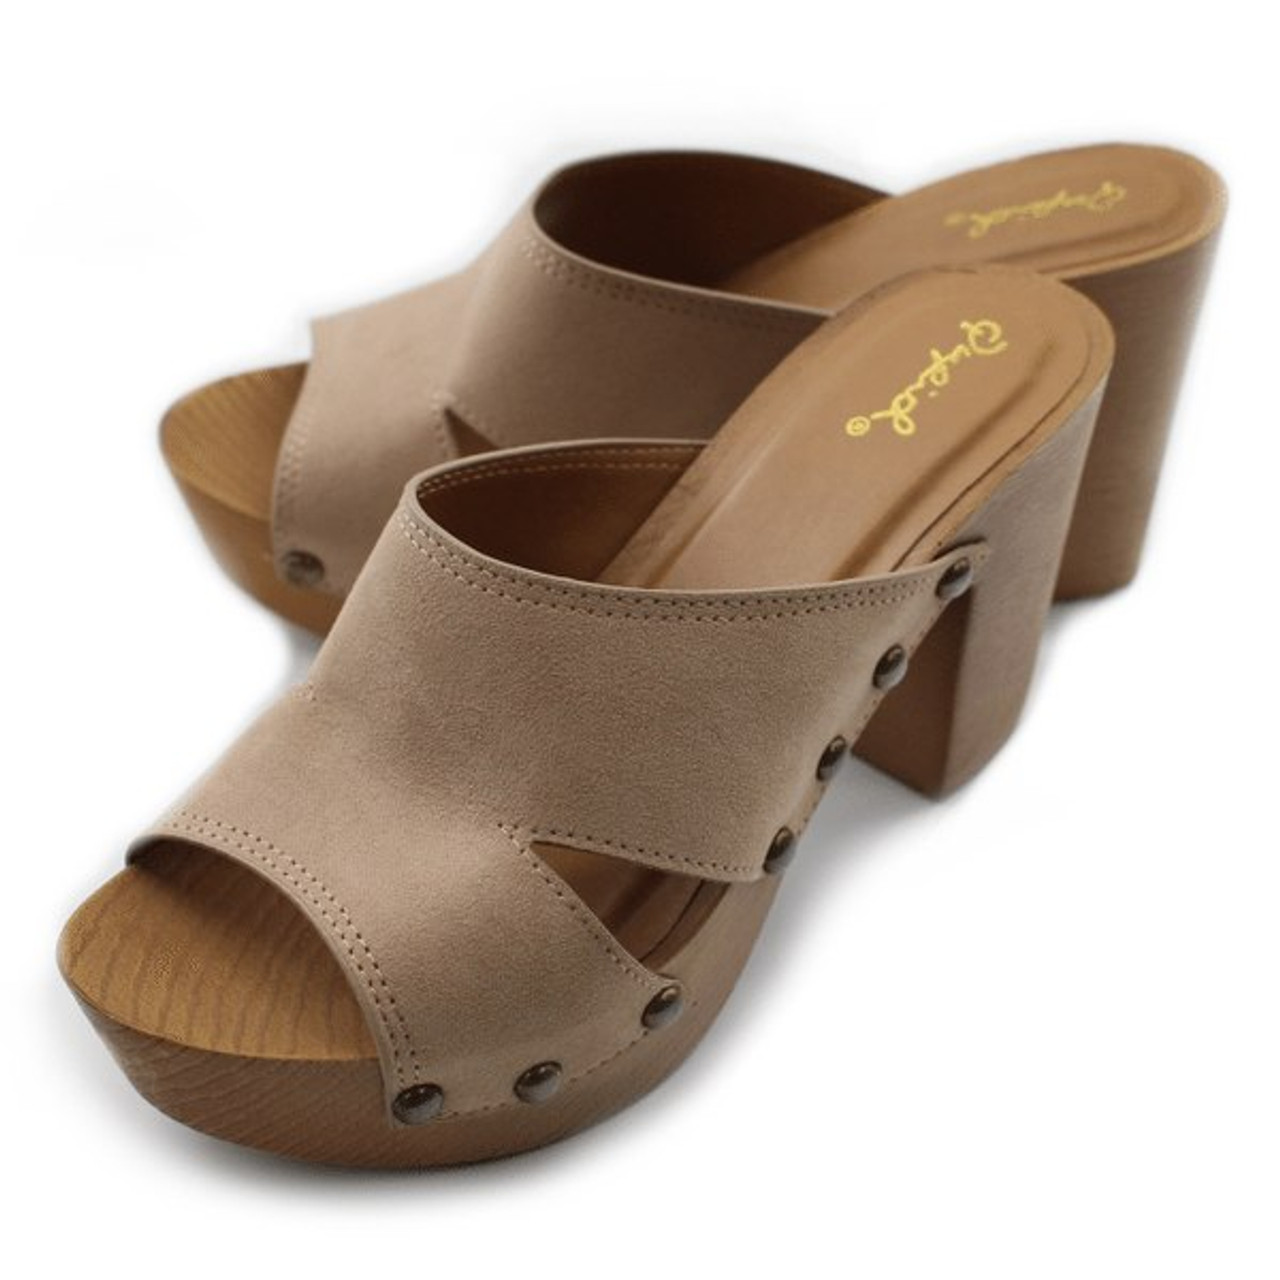 chunky heel sandals